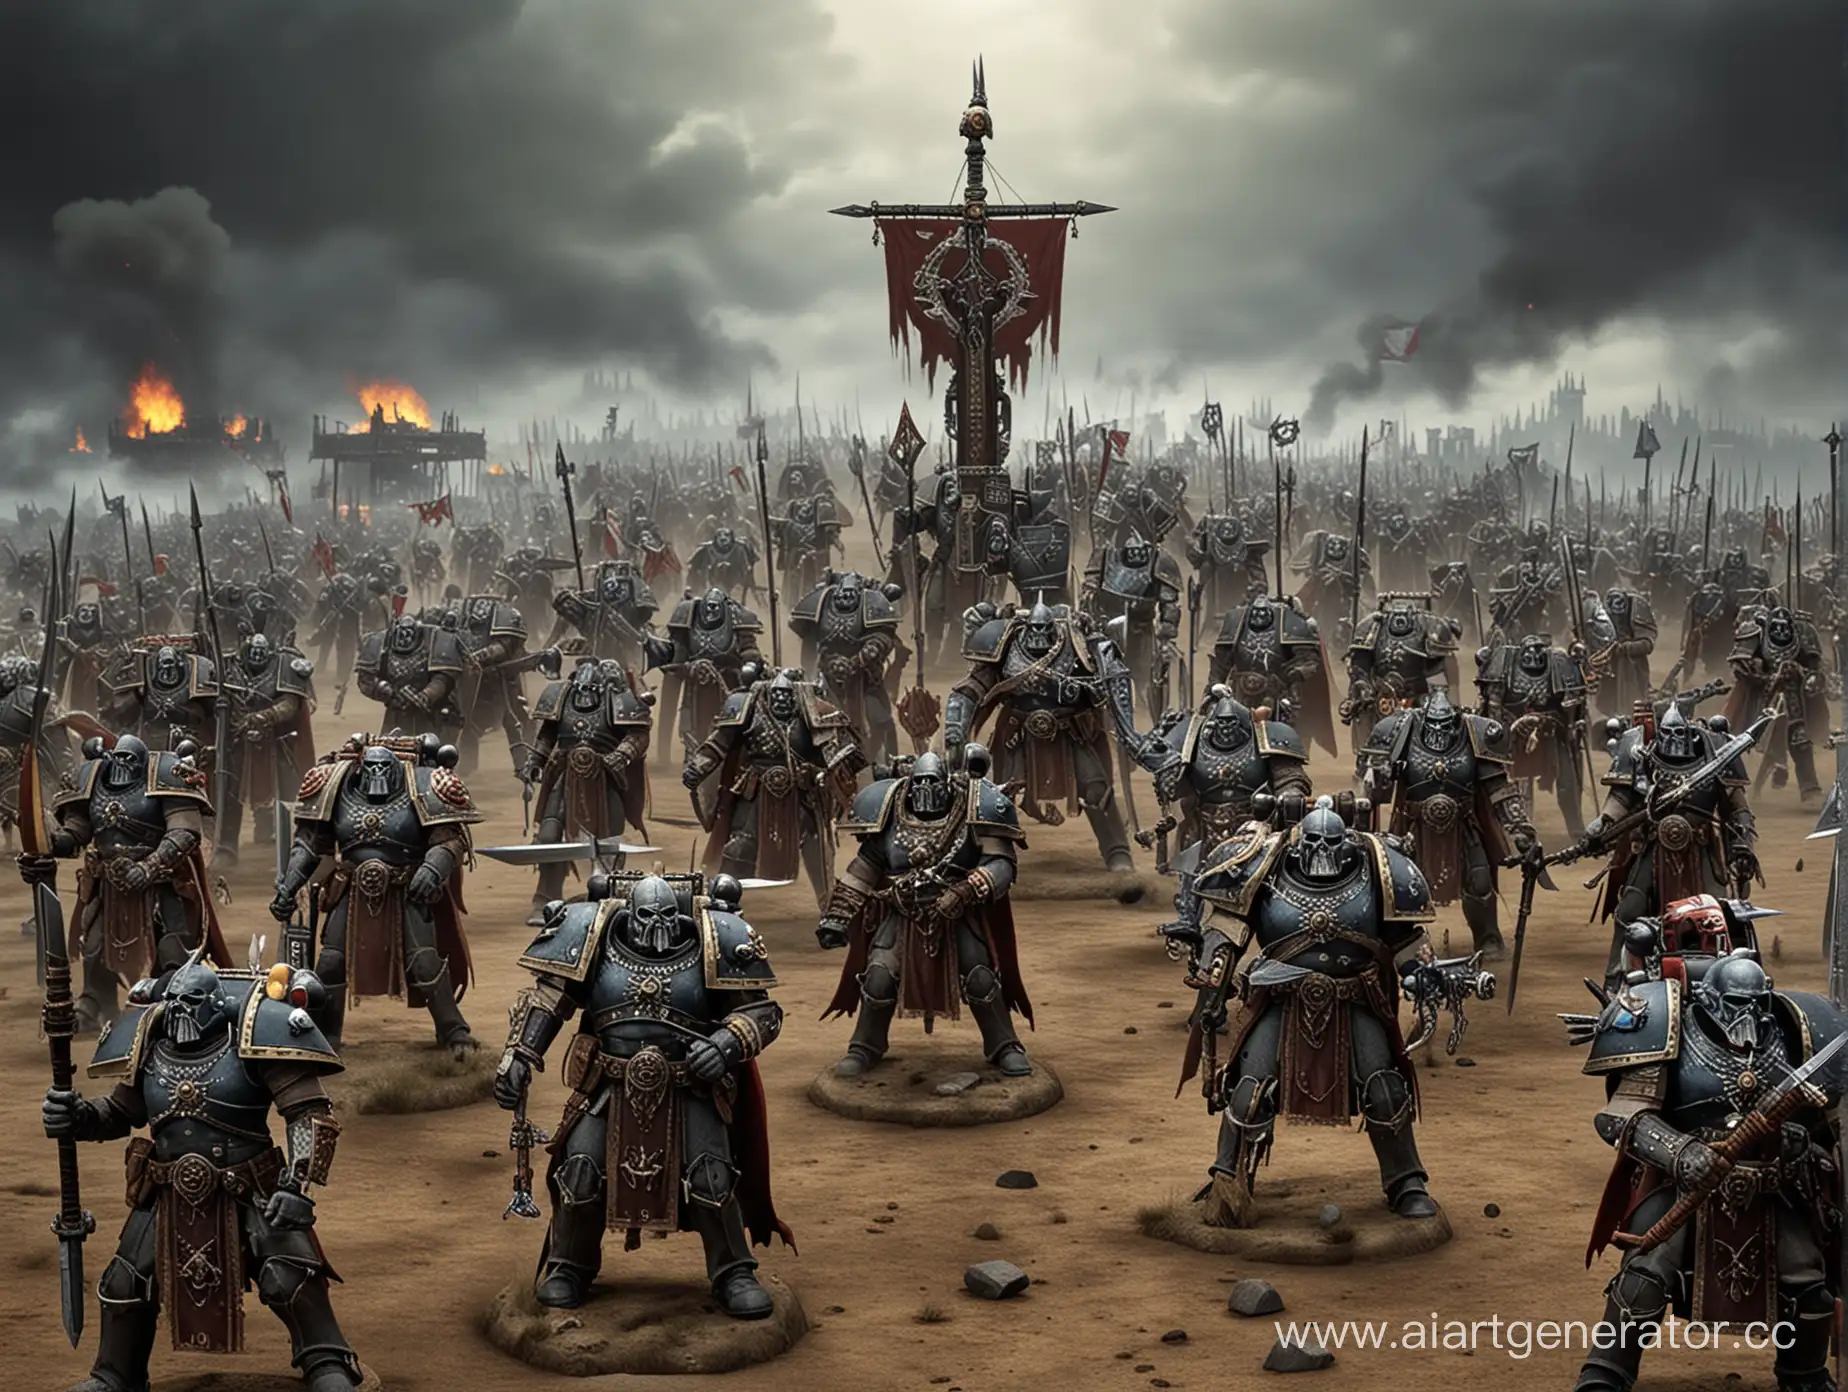 Epic-Battle-Scene-Warhammer-Warriors-Clash-in-Fiery-Conflict